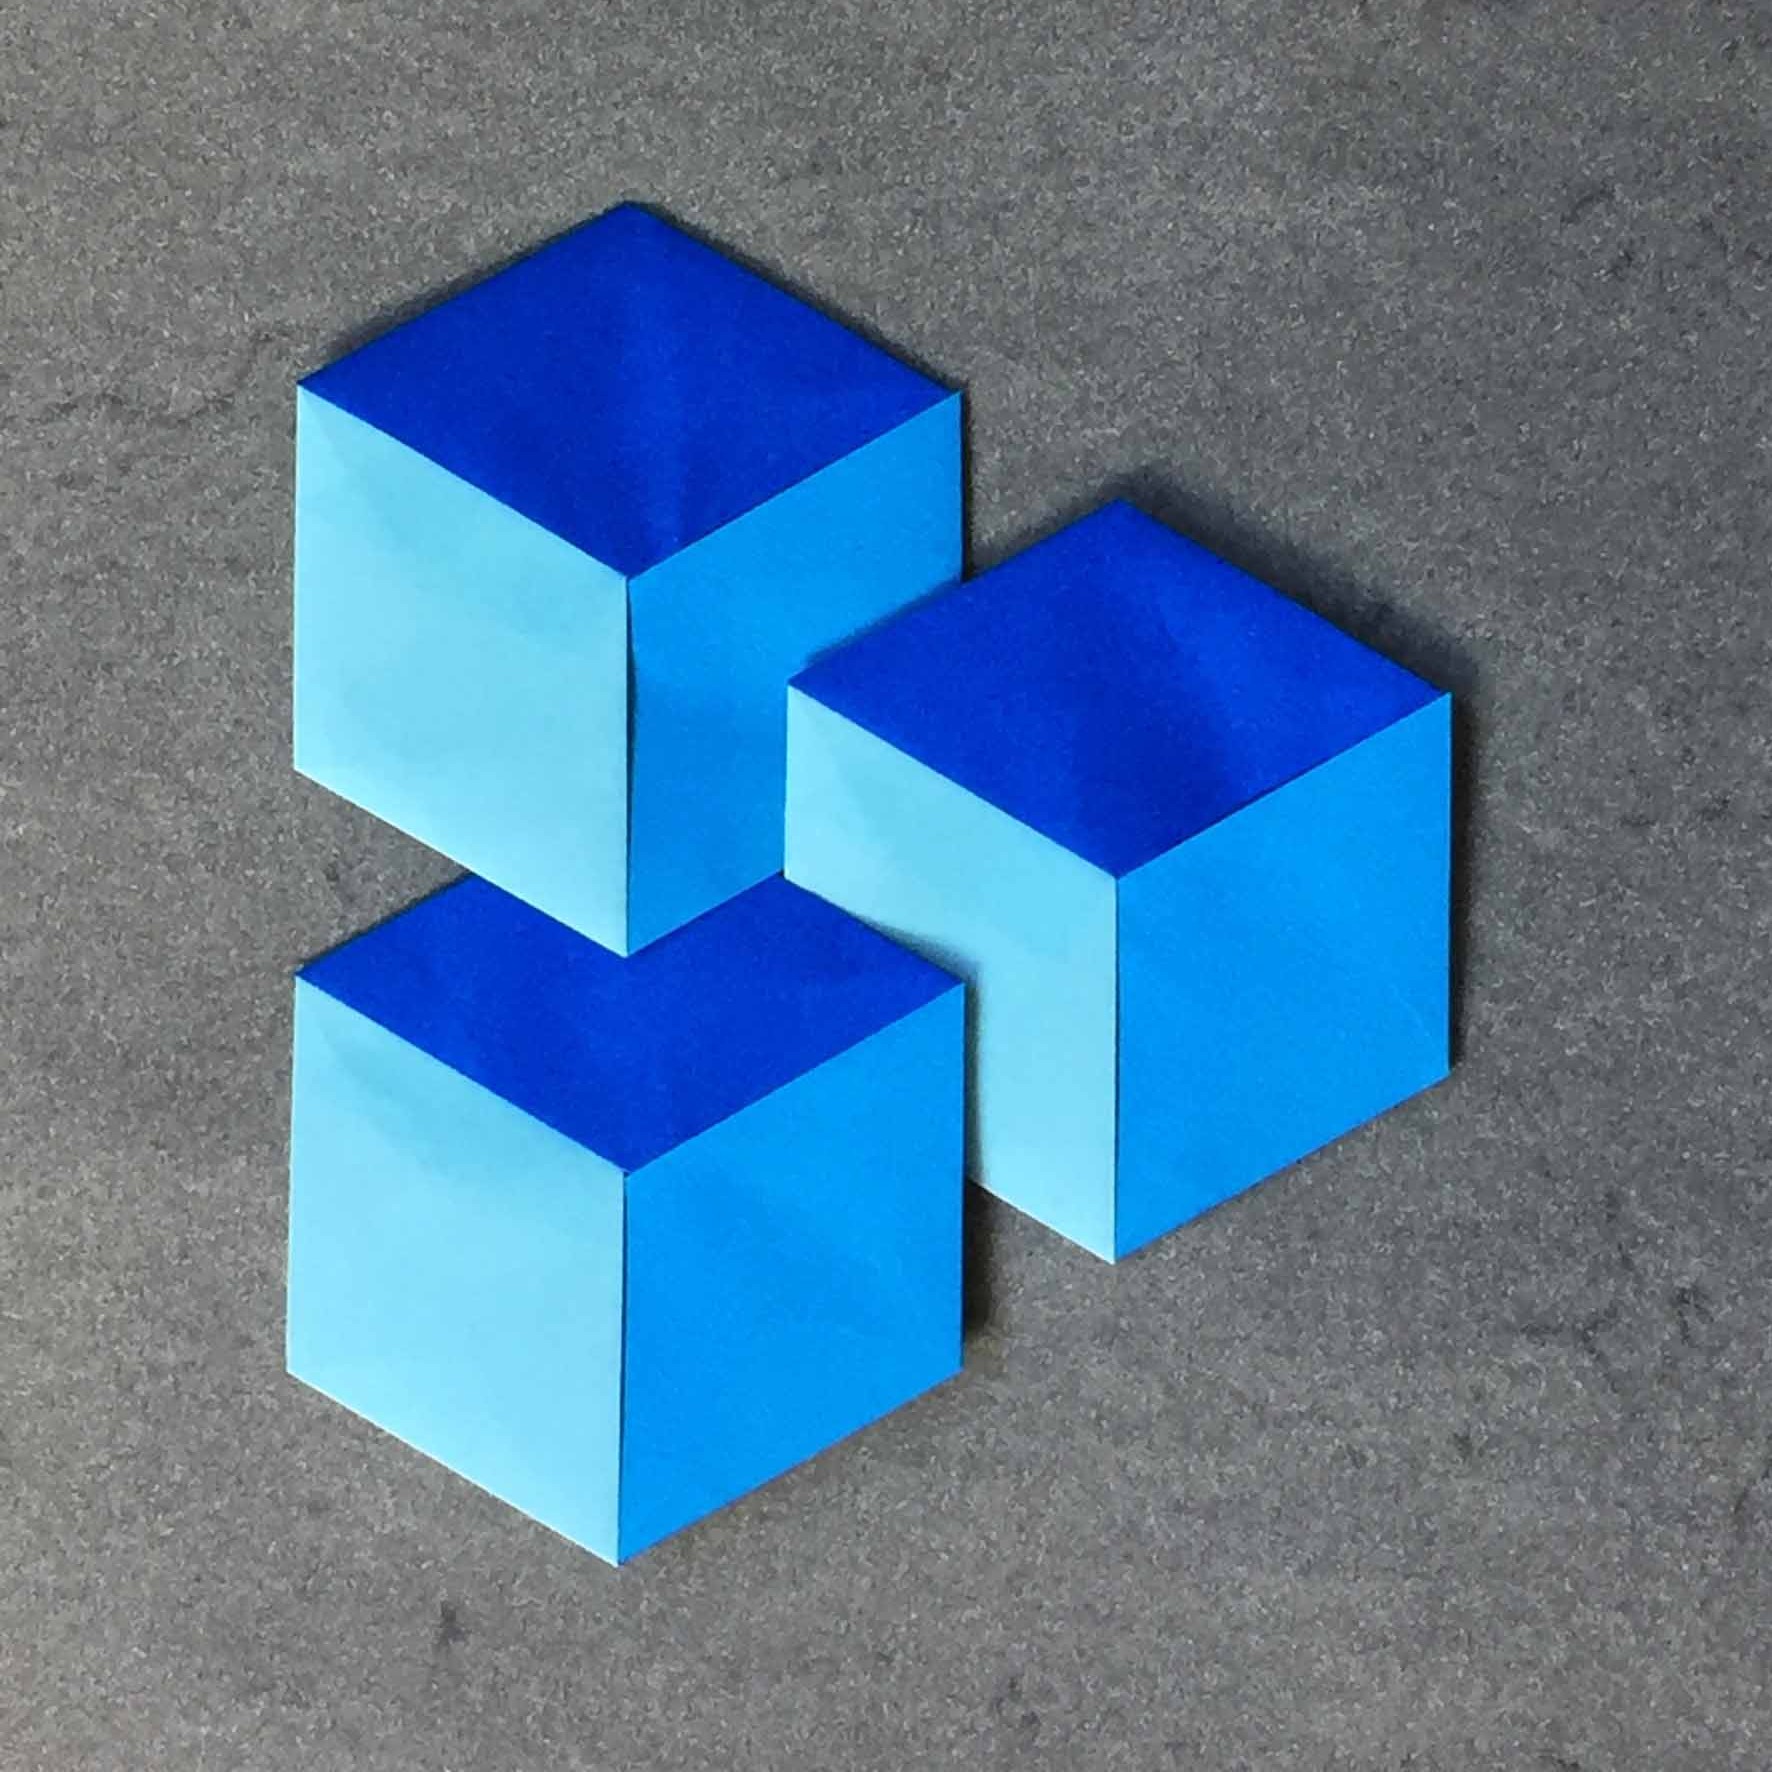 Cube Illusions